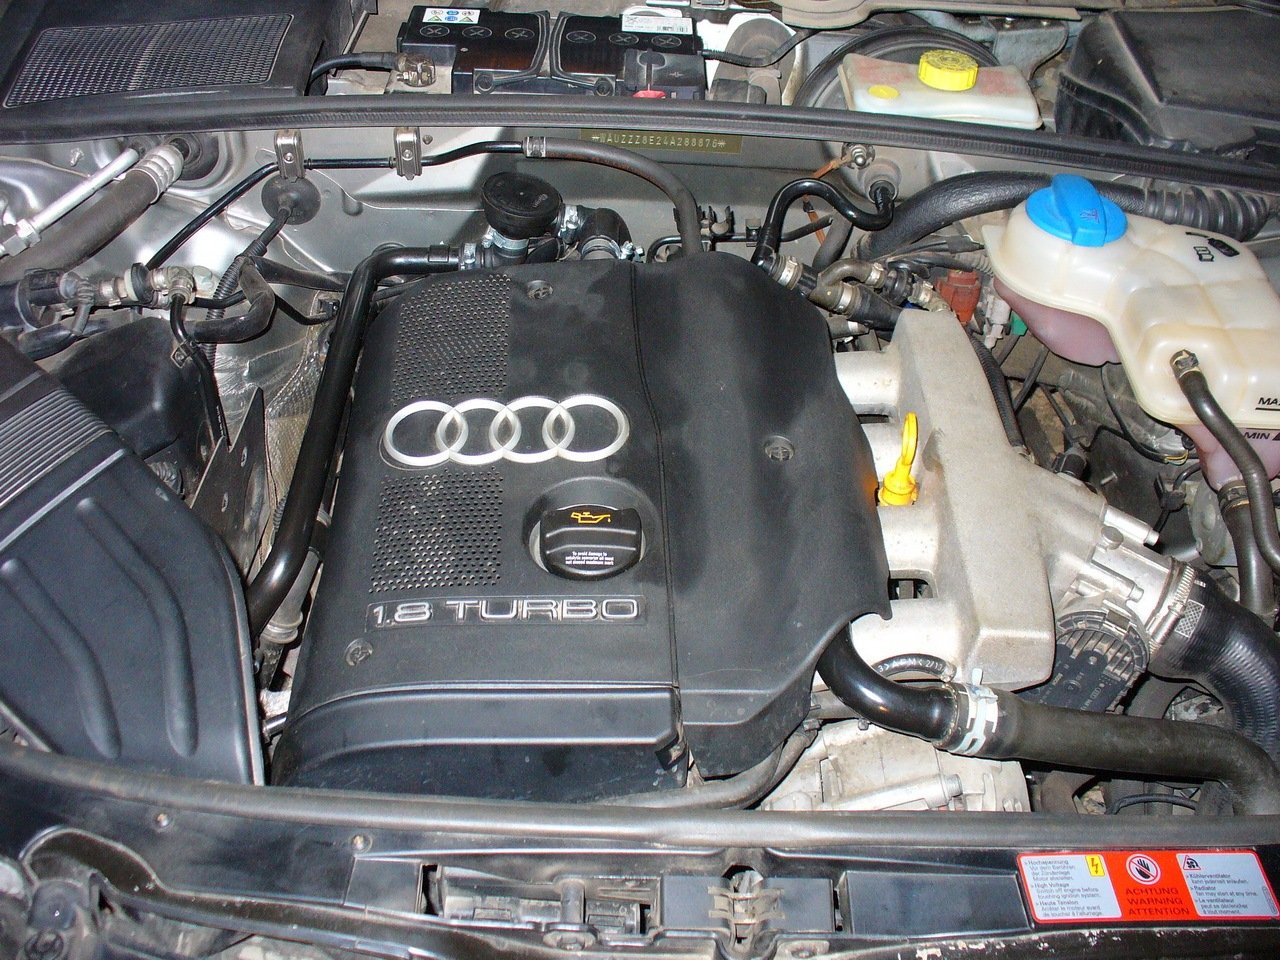 Масло ауди а4 1.8 турбо. Двигатель Ауди а4 б6 1.8 турбо. Audi a4 2002 1.8 Turbo dvigatel. Audi a4 b6 amb. Audi a4 b6 1.8t мотор.